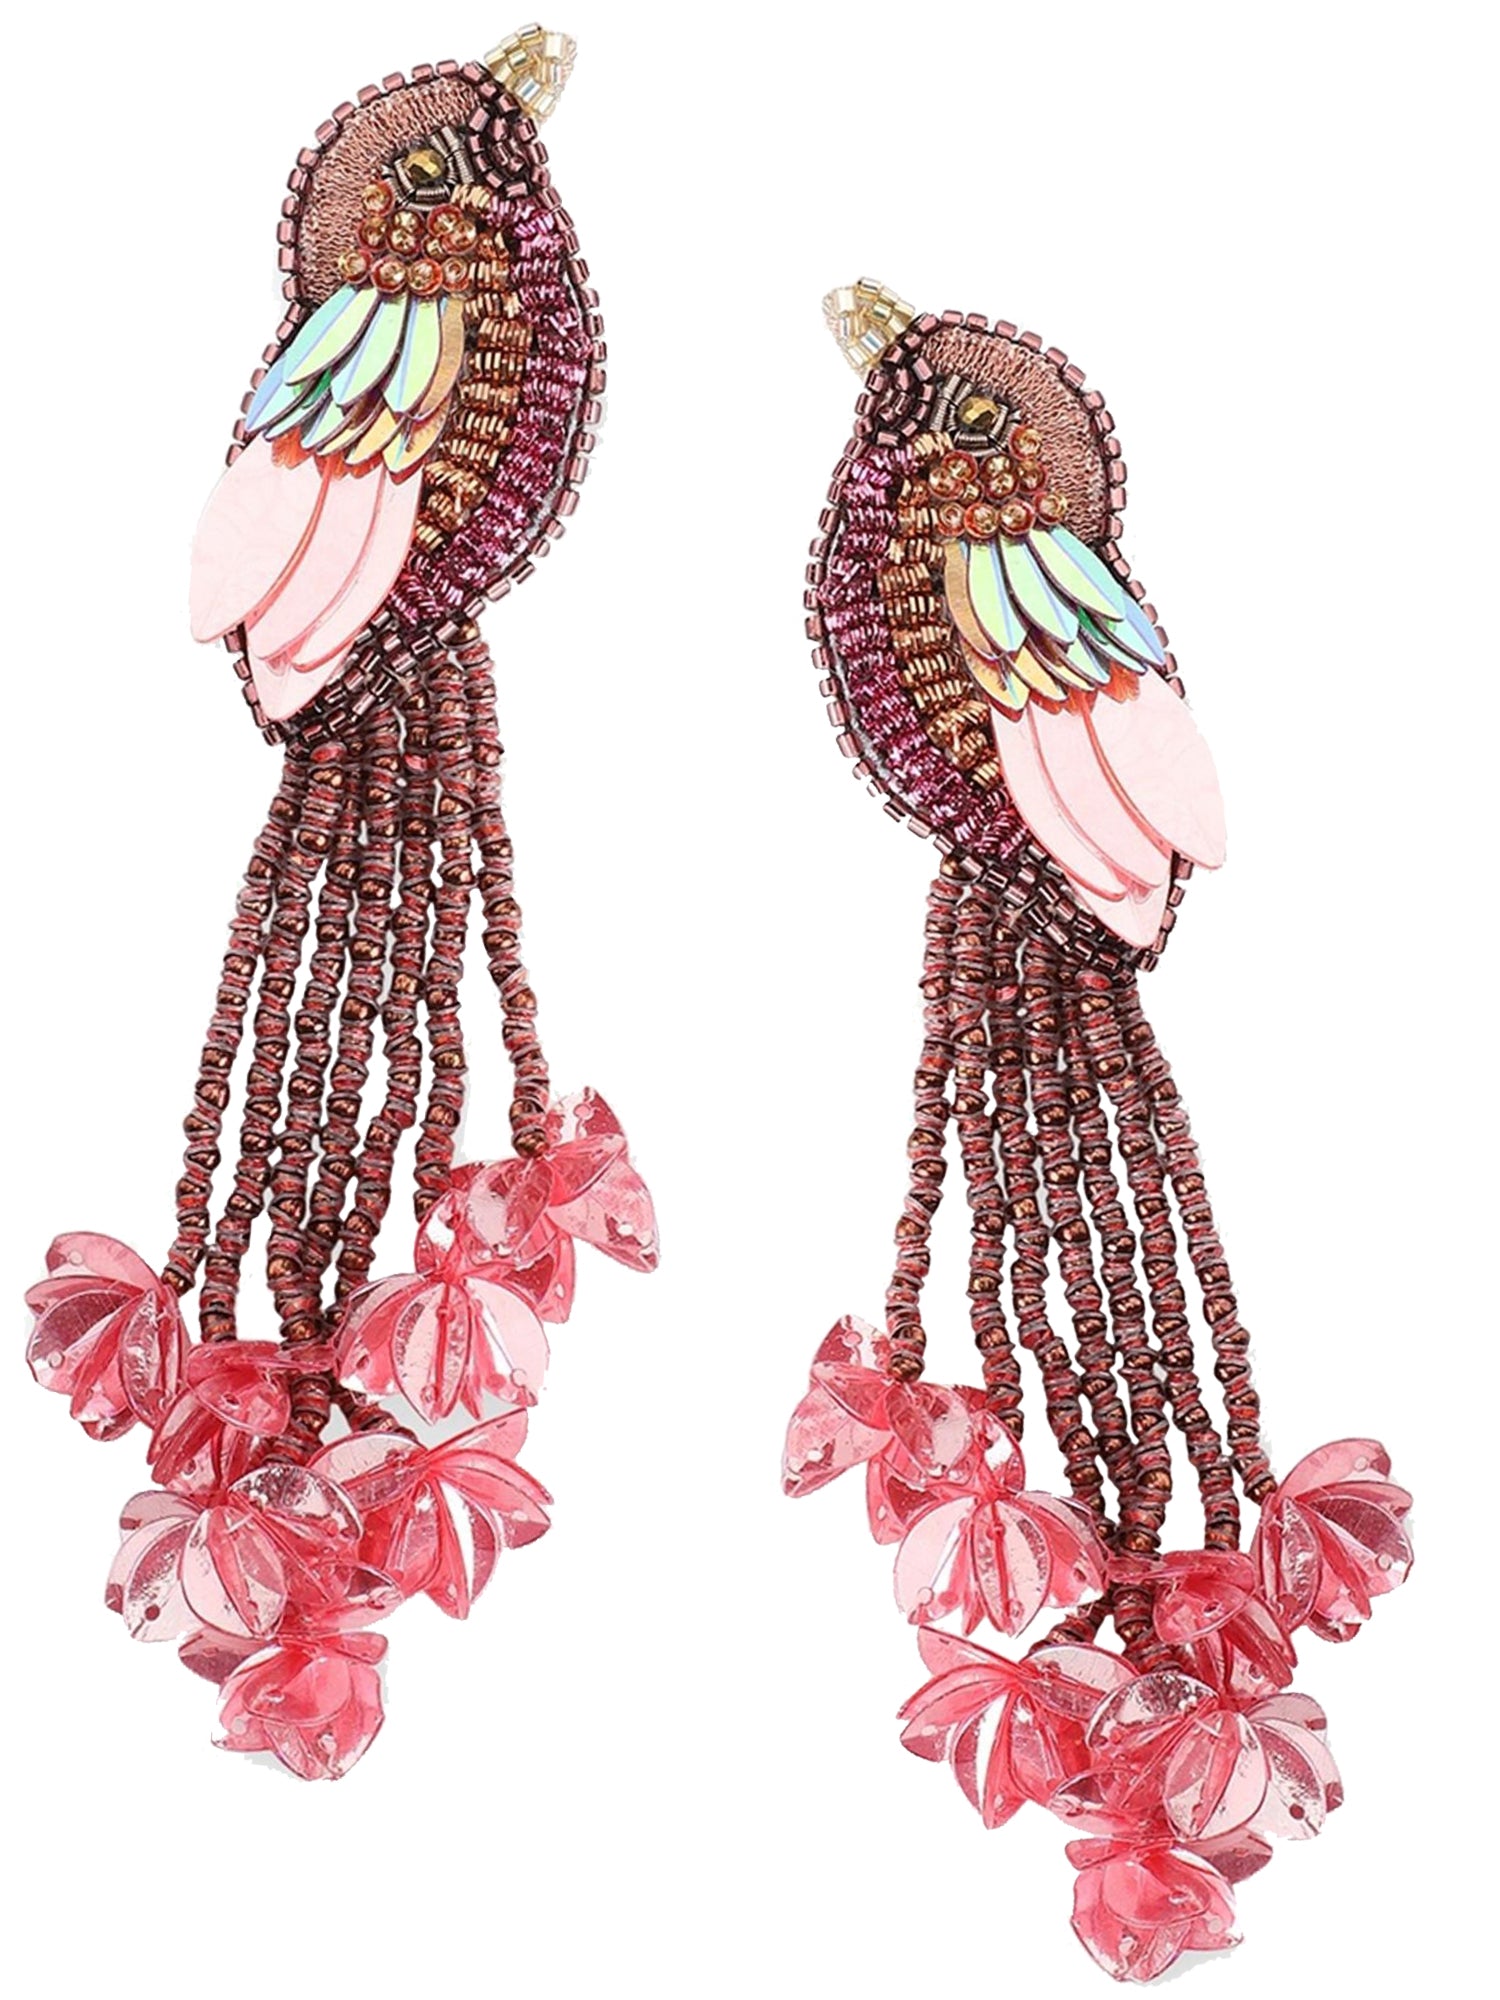 Kingfisher Earrings